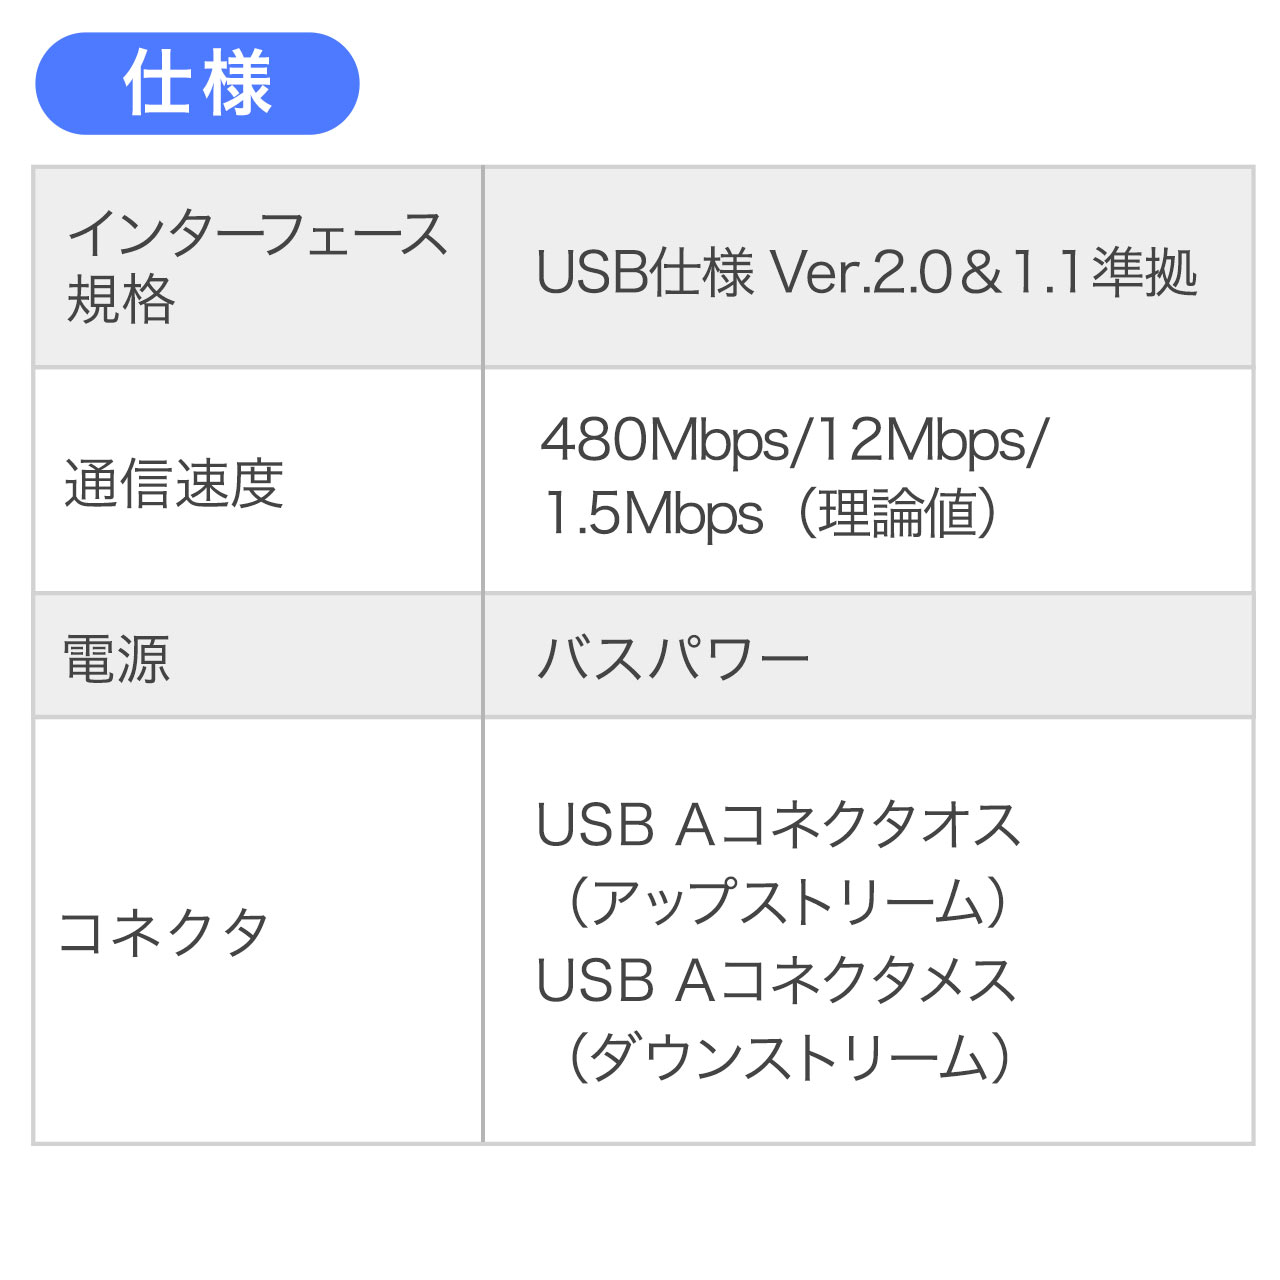 yő71%OFF匈ZՁzUSBs[^[P[u 20m USB2.0 ubN USBP[u 500-USB007